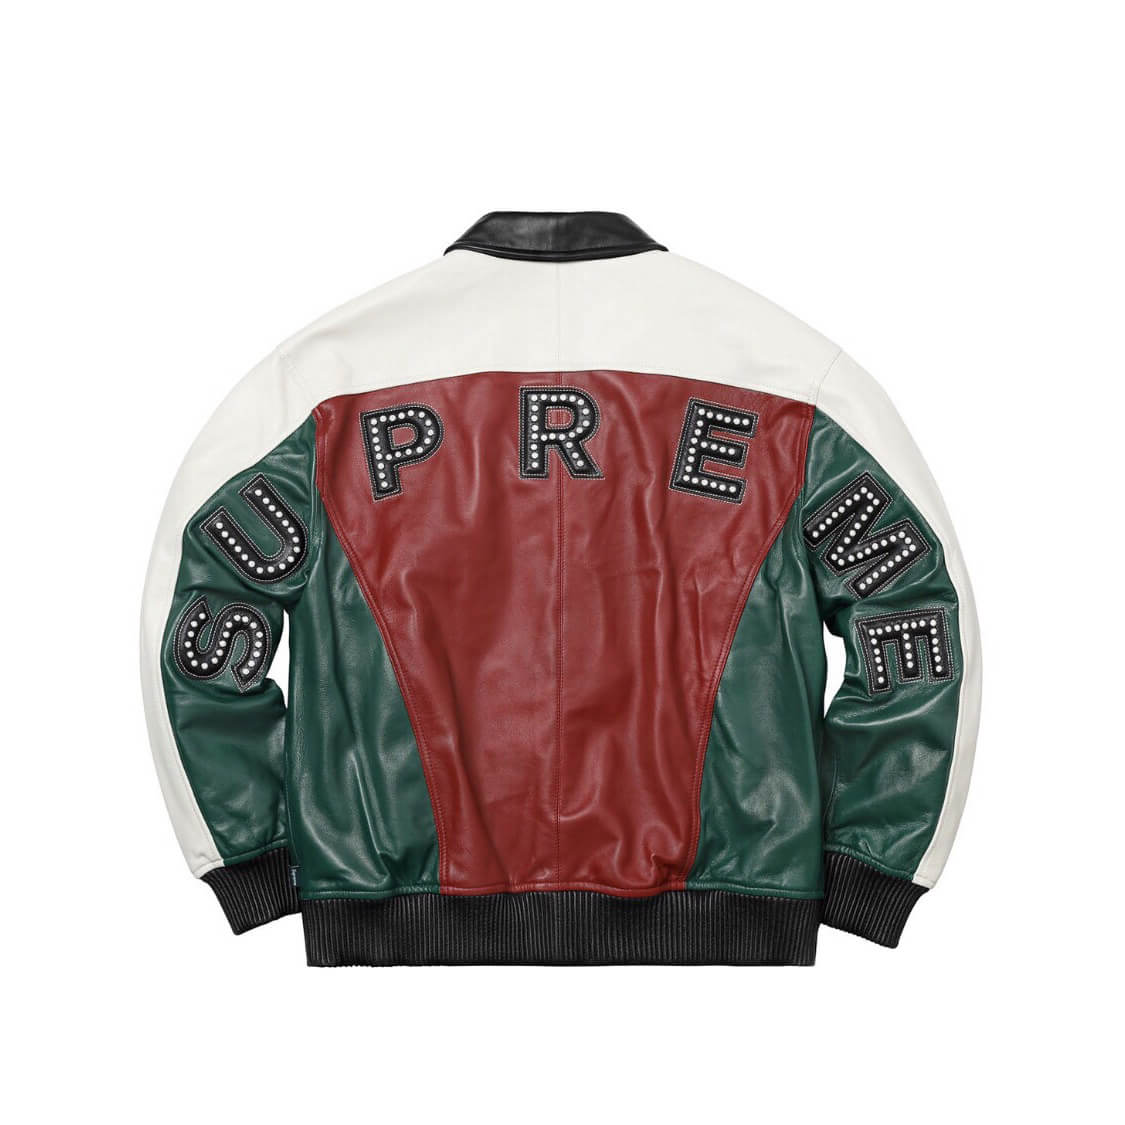 Maker of Jacket Fashion Jackets Supreme Studded Arc Logo Leather